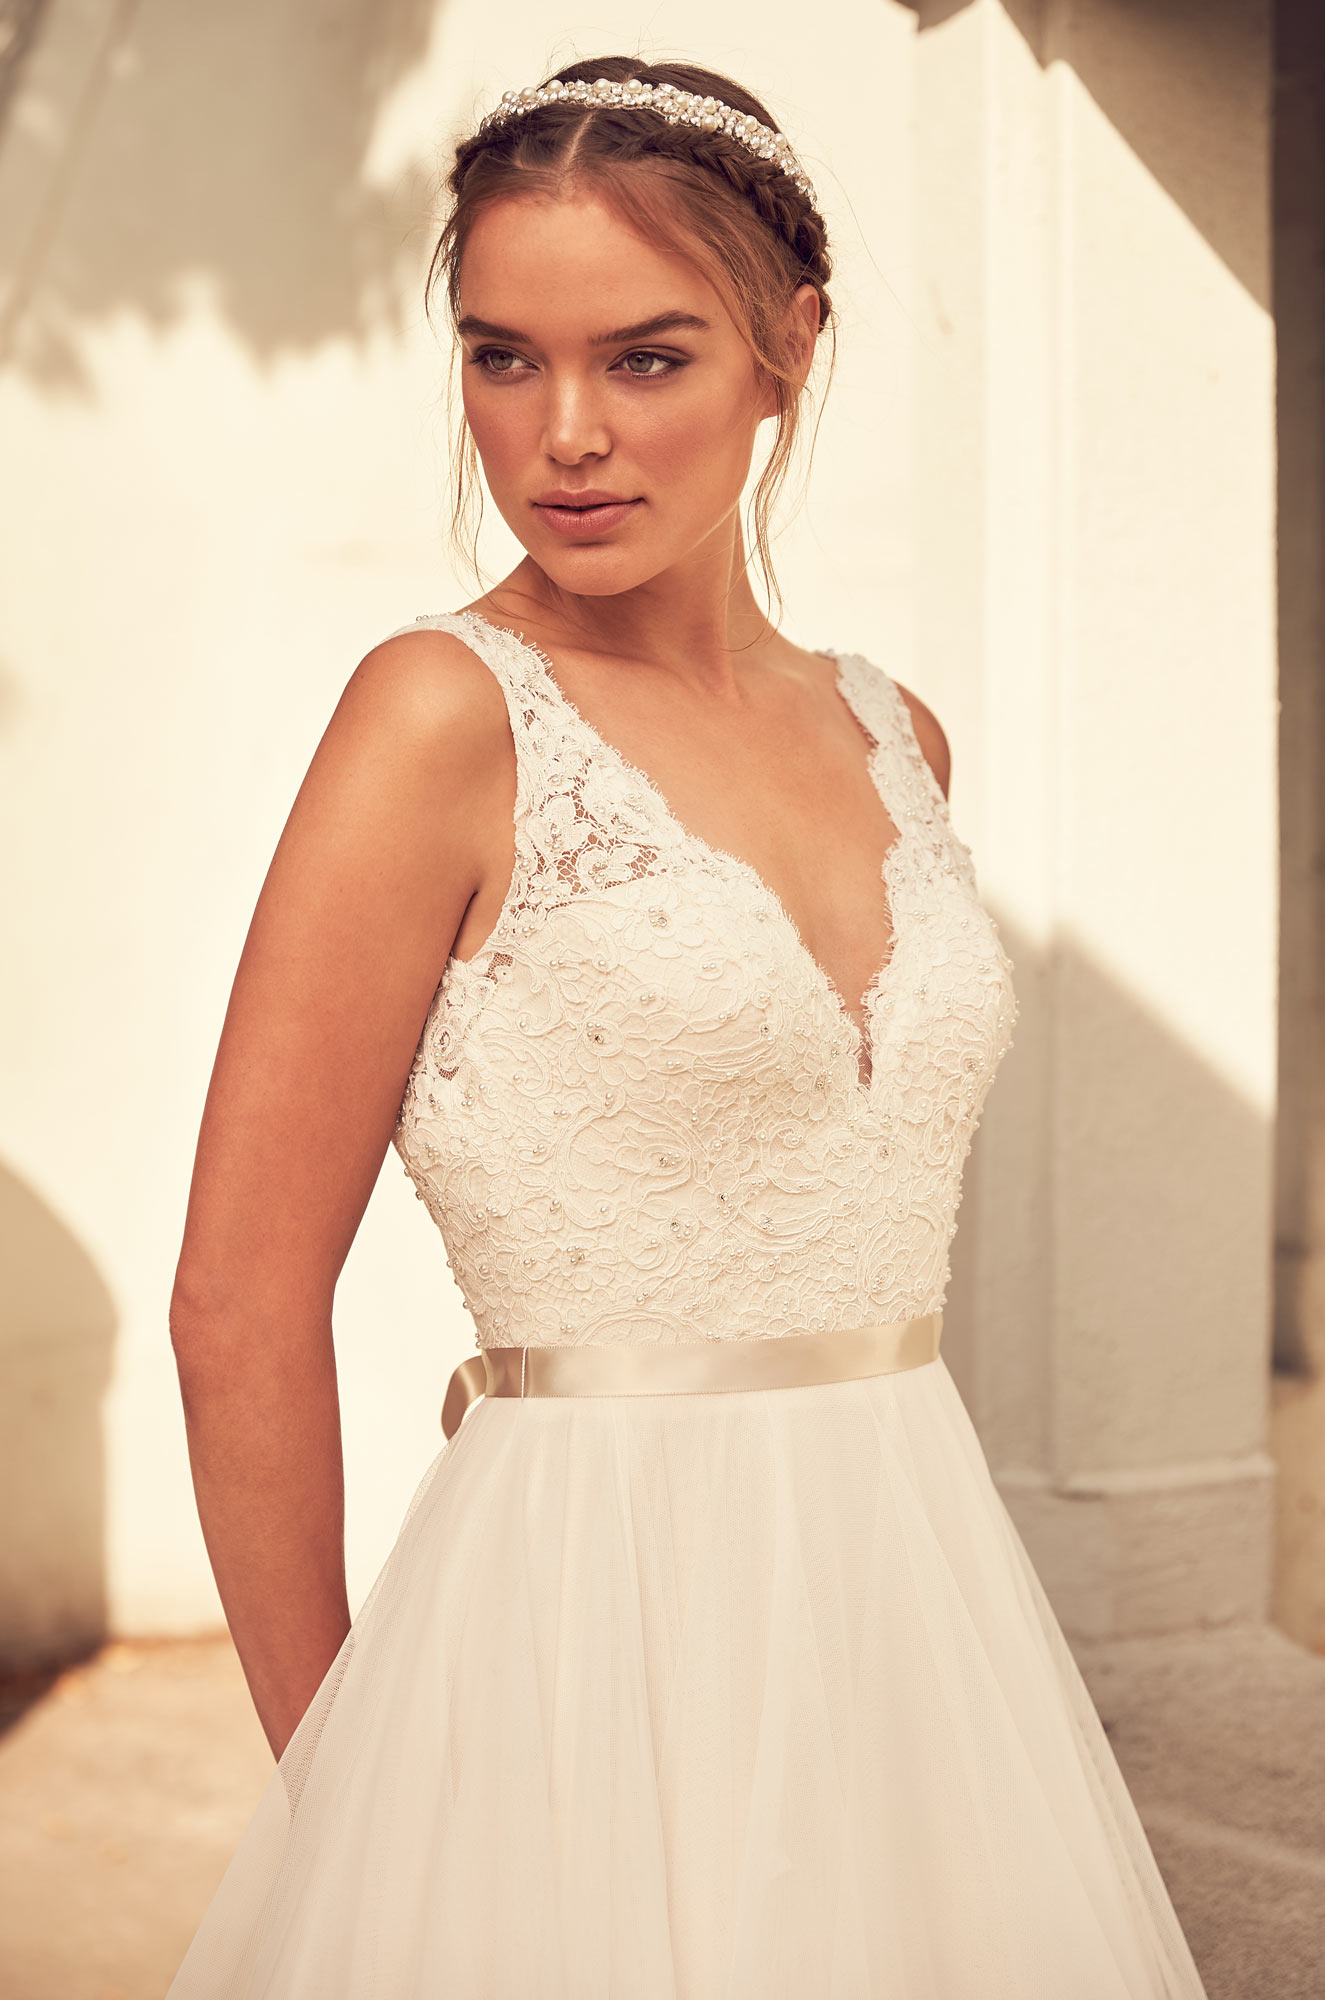 Model wearing a white dress 22